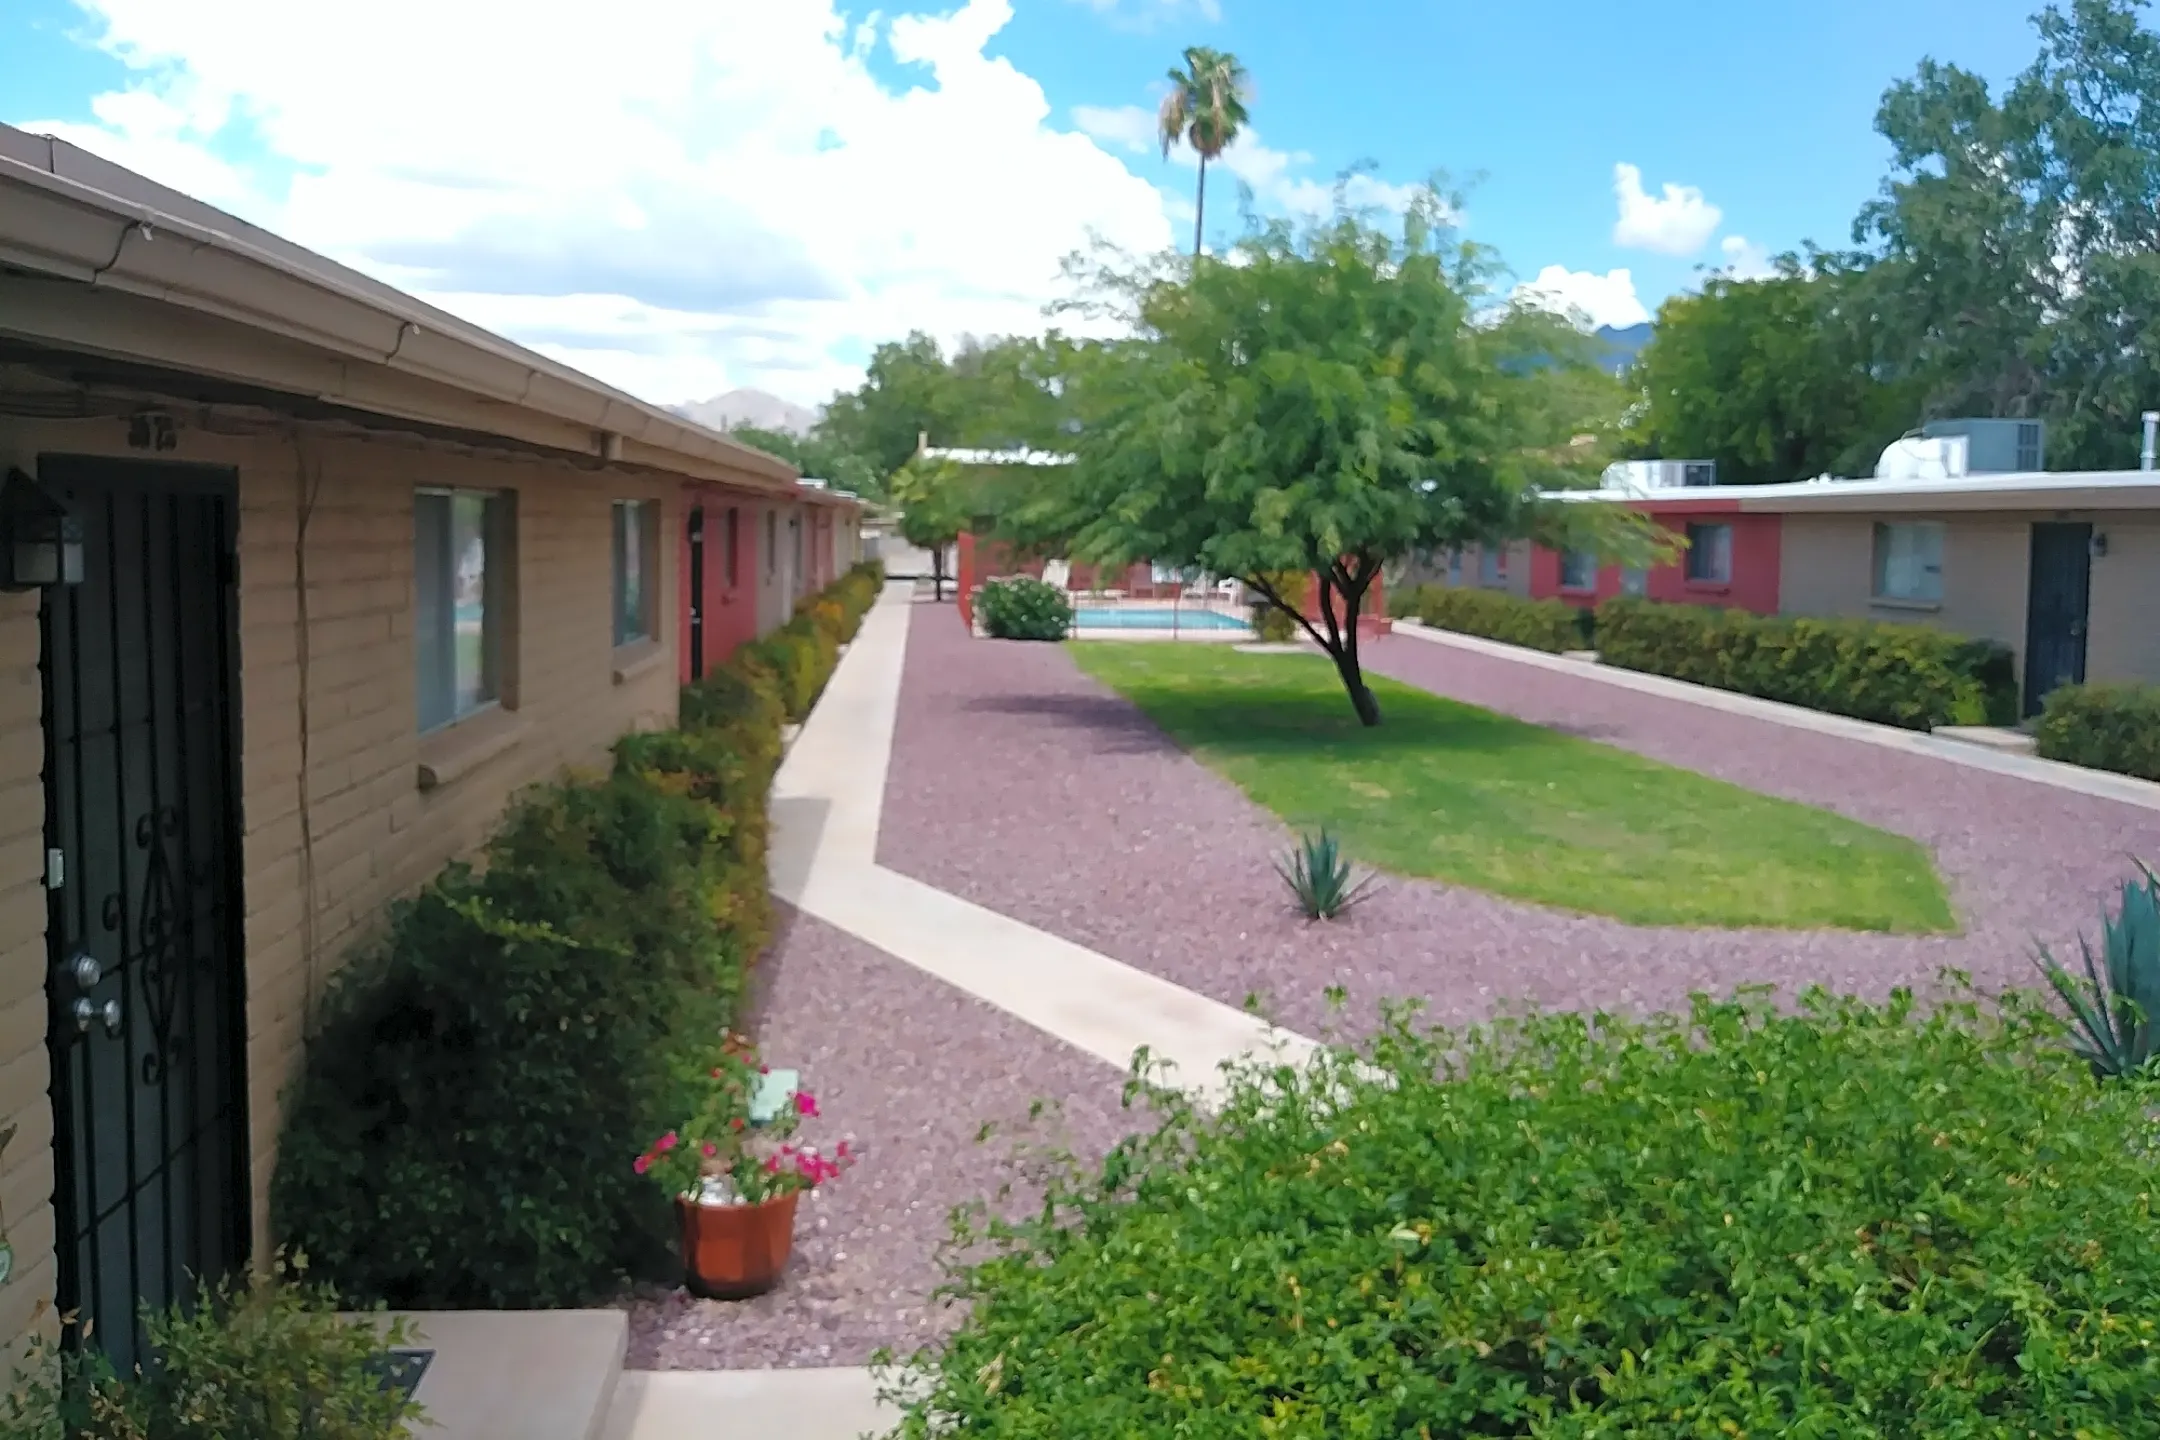 St James Court Apartments Tucson AZ 85716